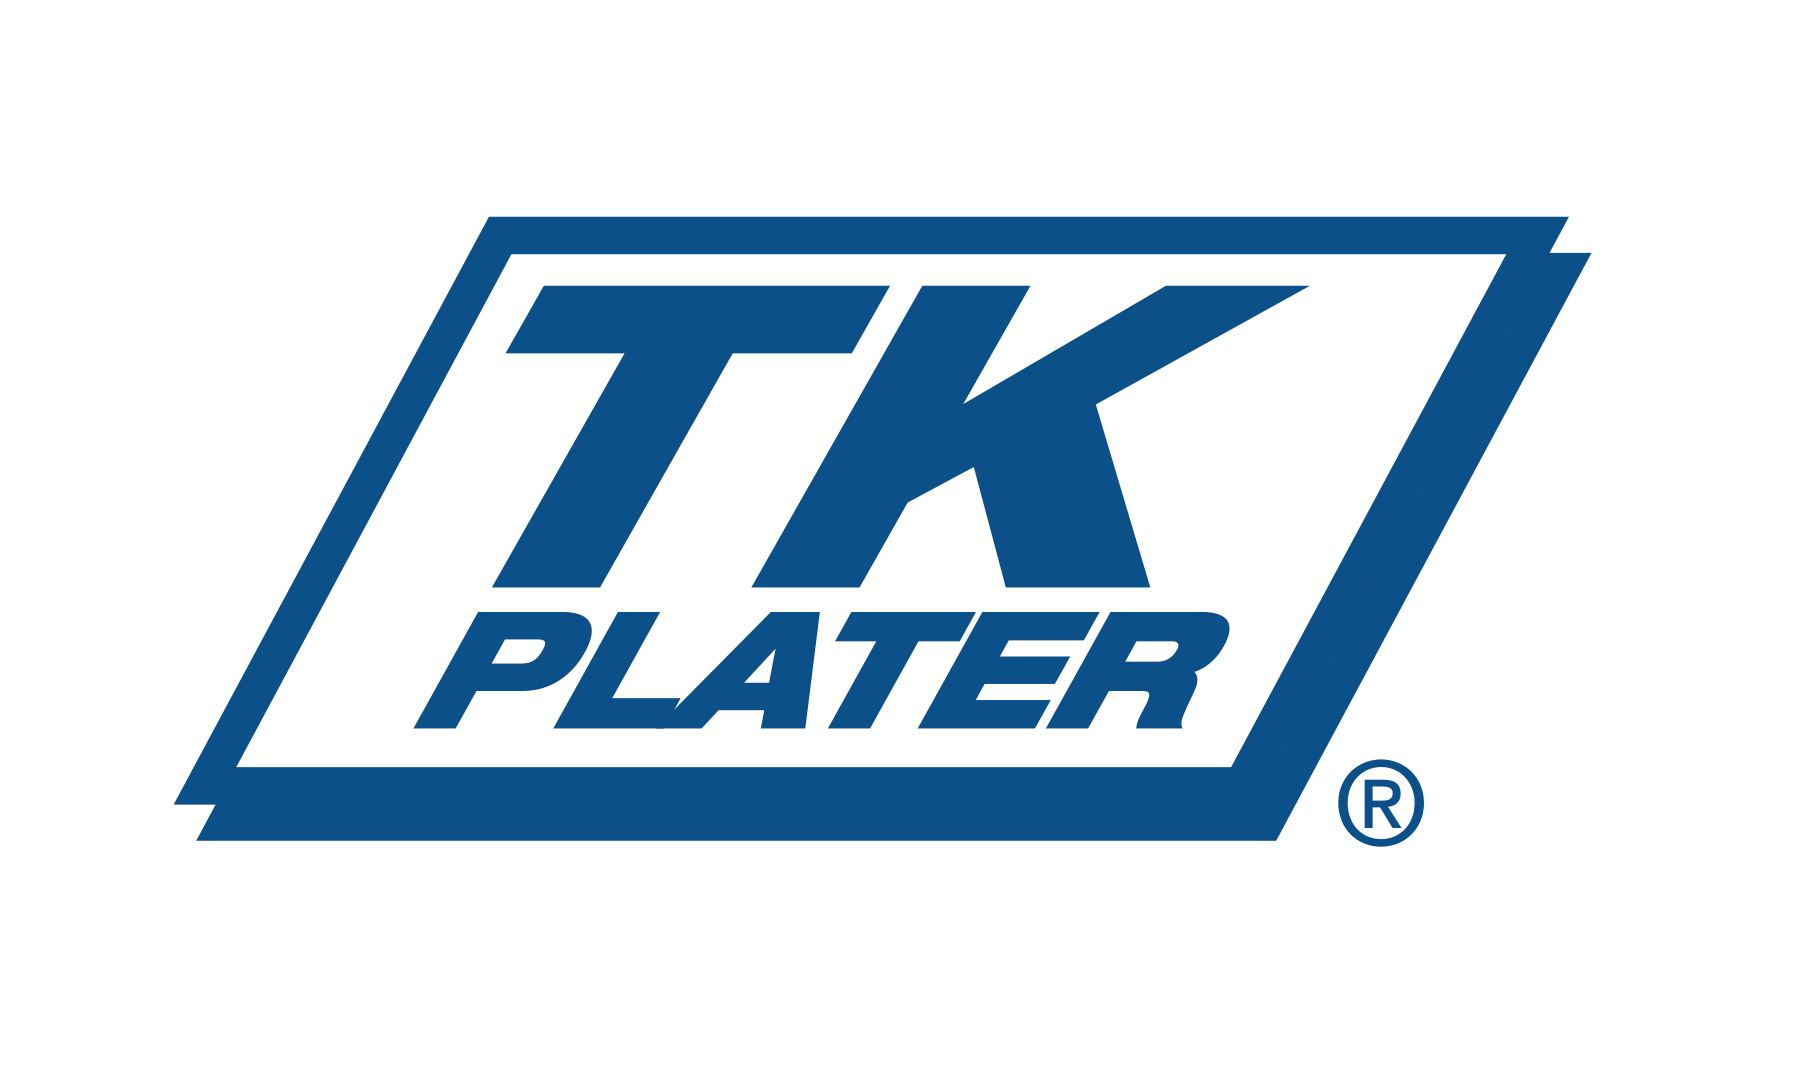 TK Plater